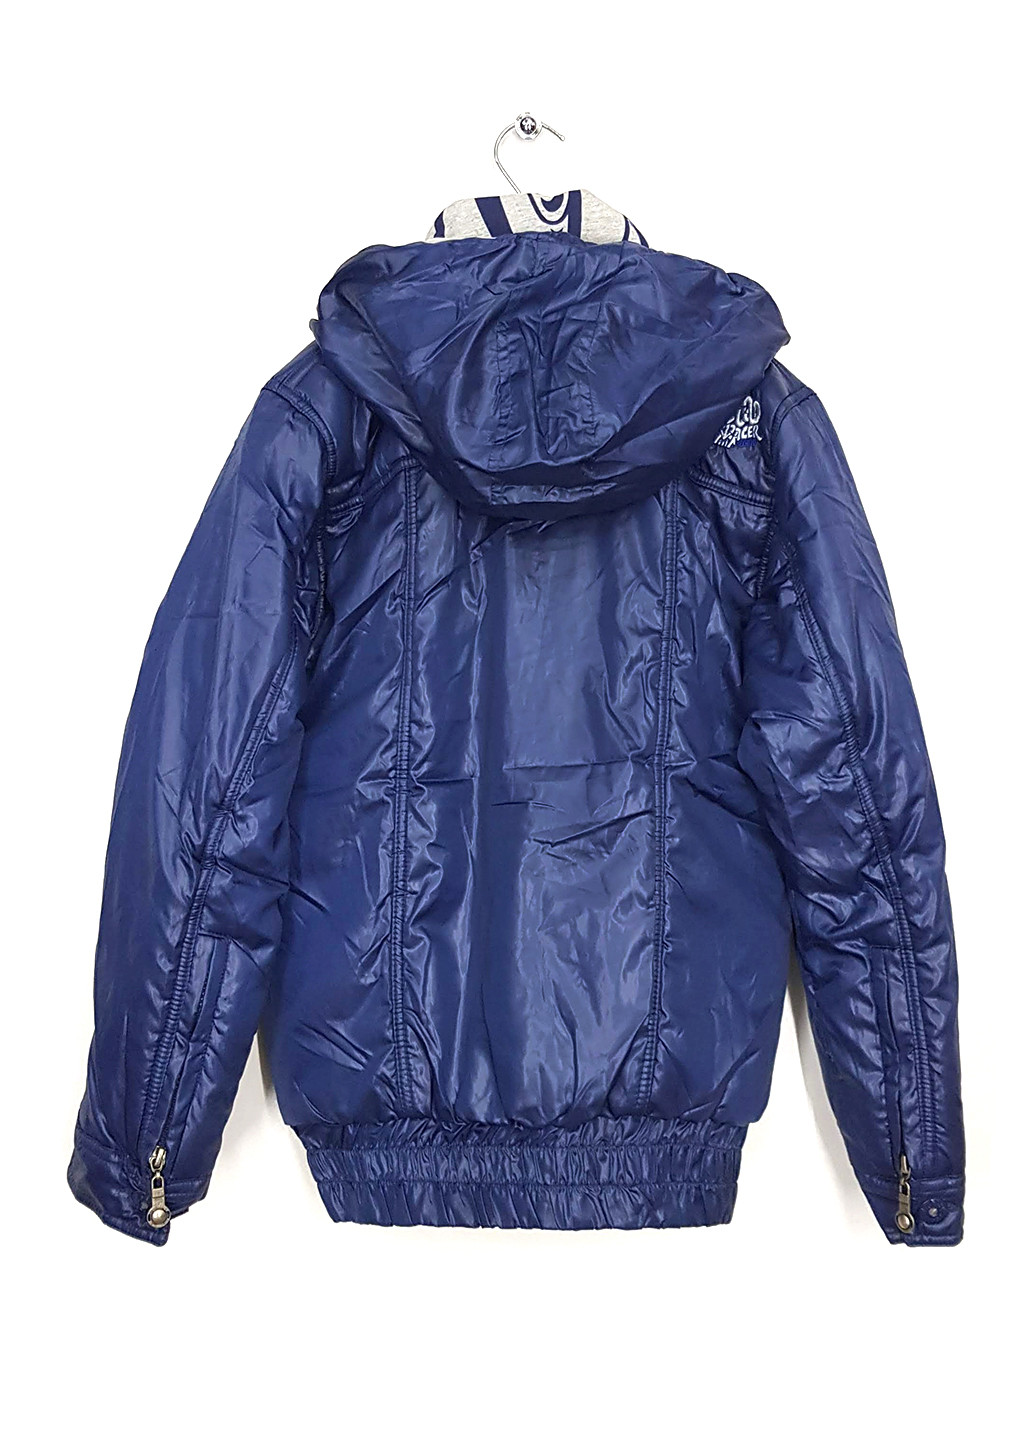 Синяя зимняя куртка Puledro